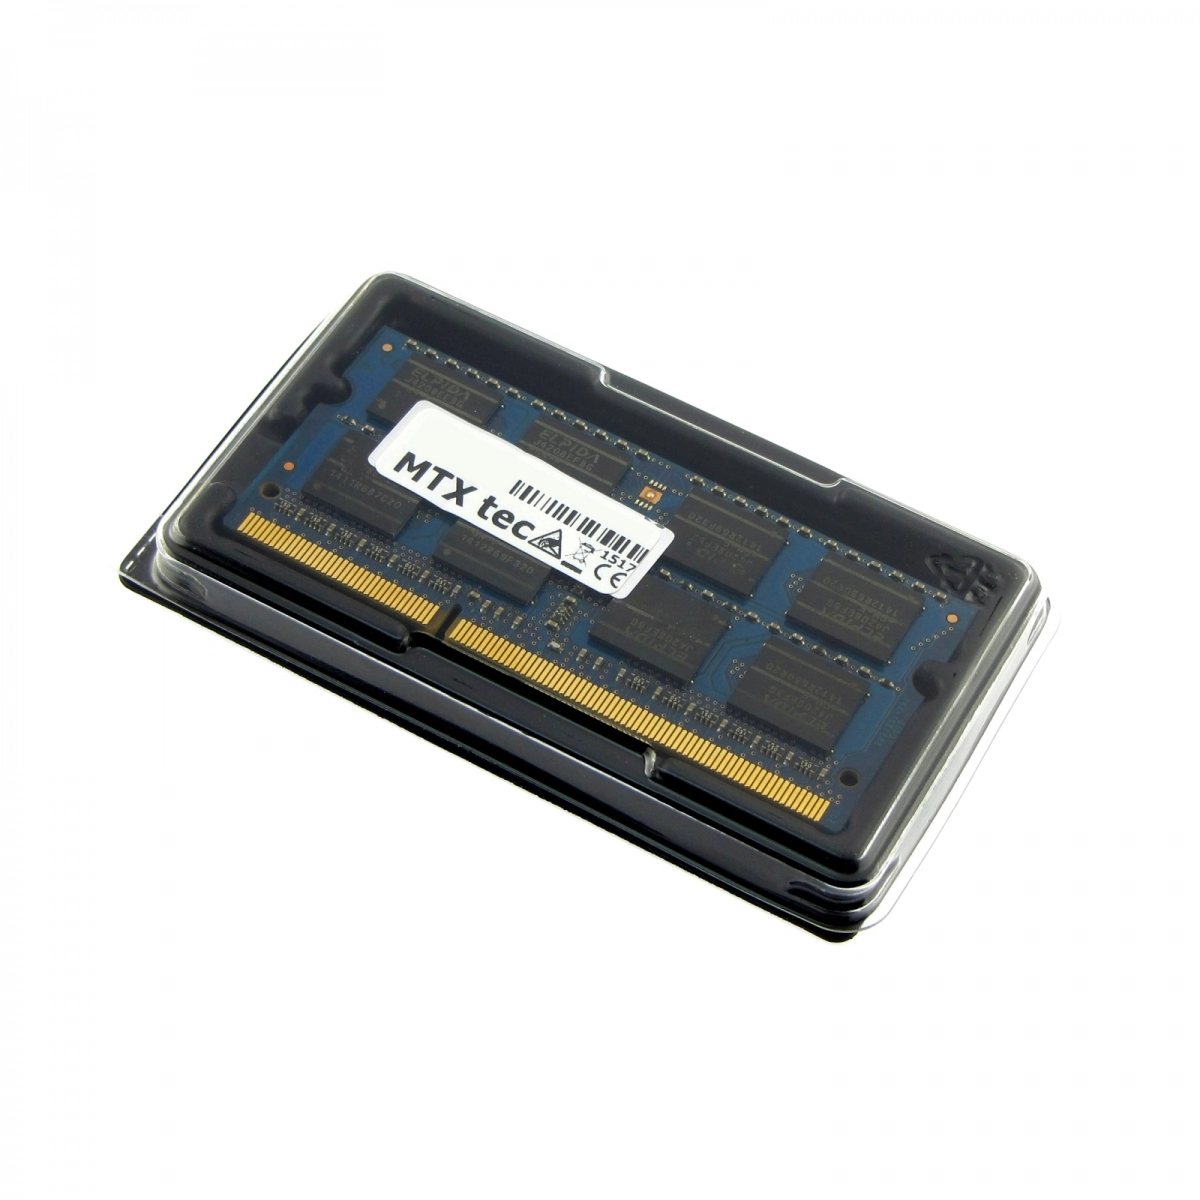 MTXtec Arbeitsspeicher 8 GB RAM für FUJITSU LifeBook E754